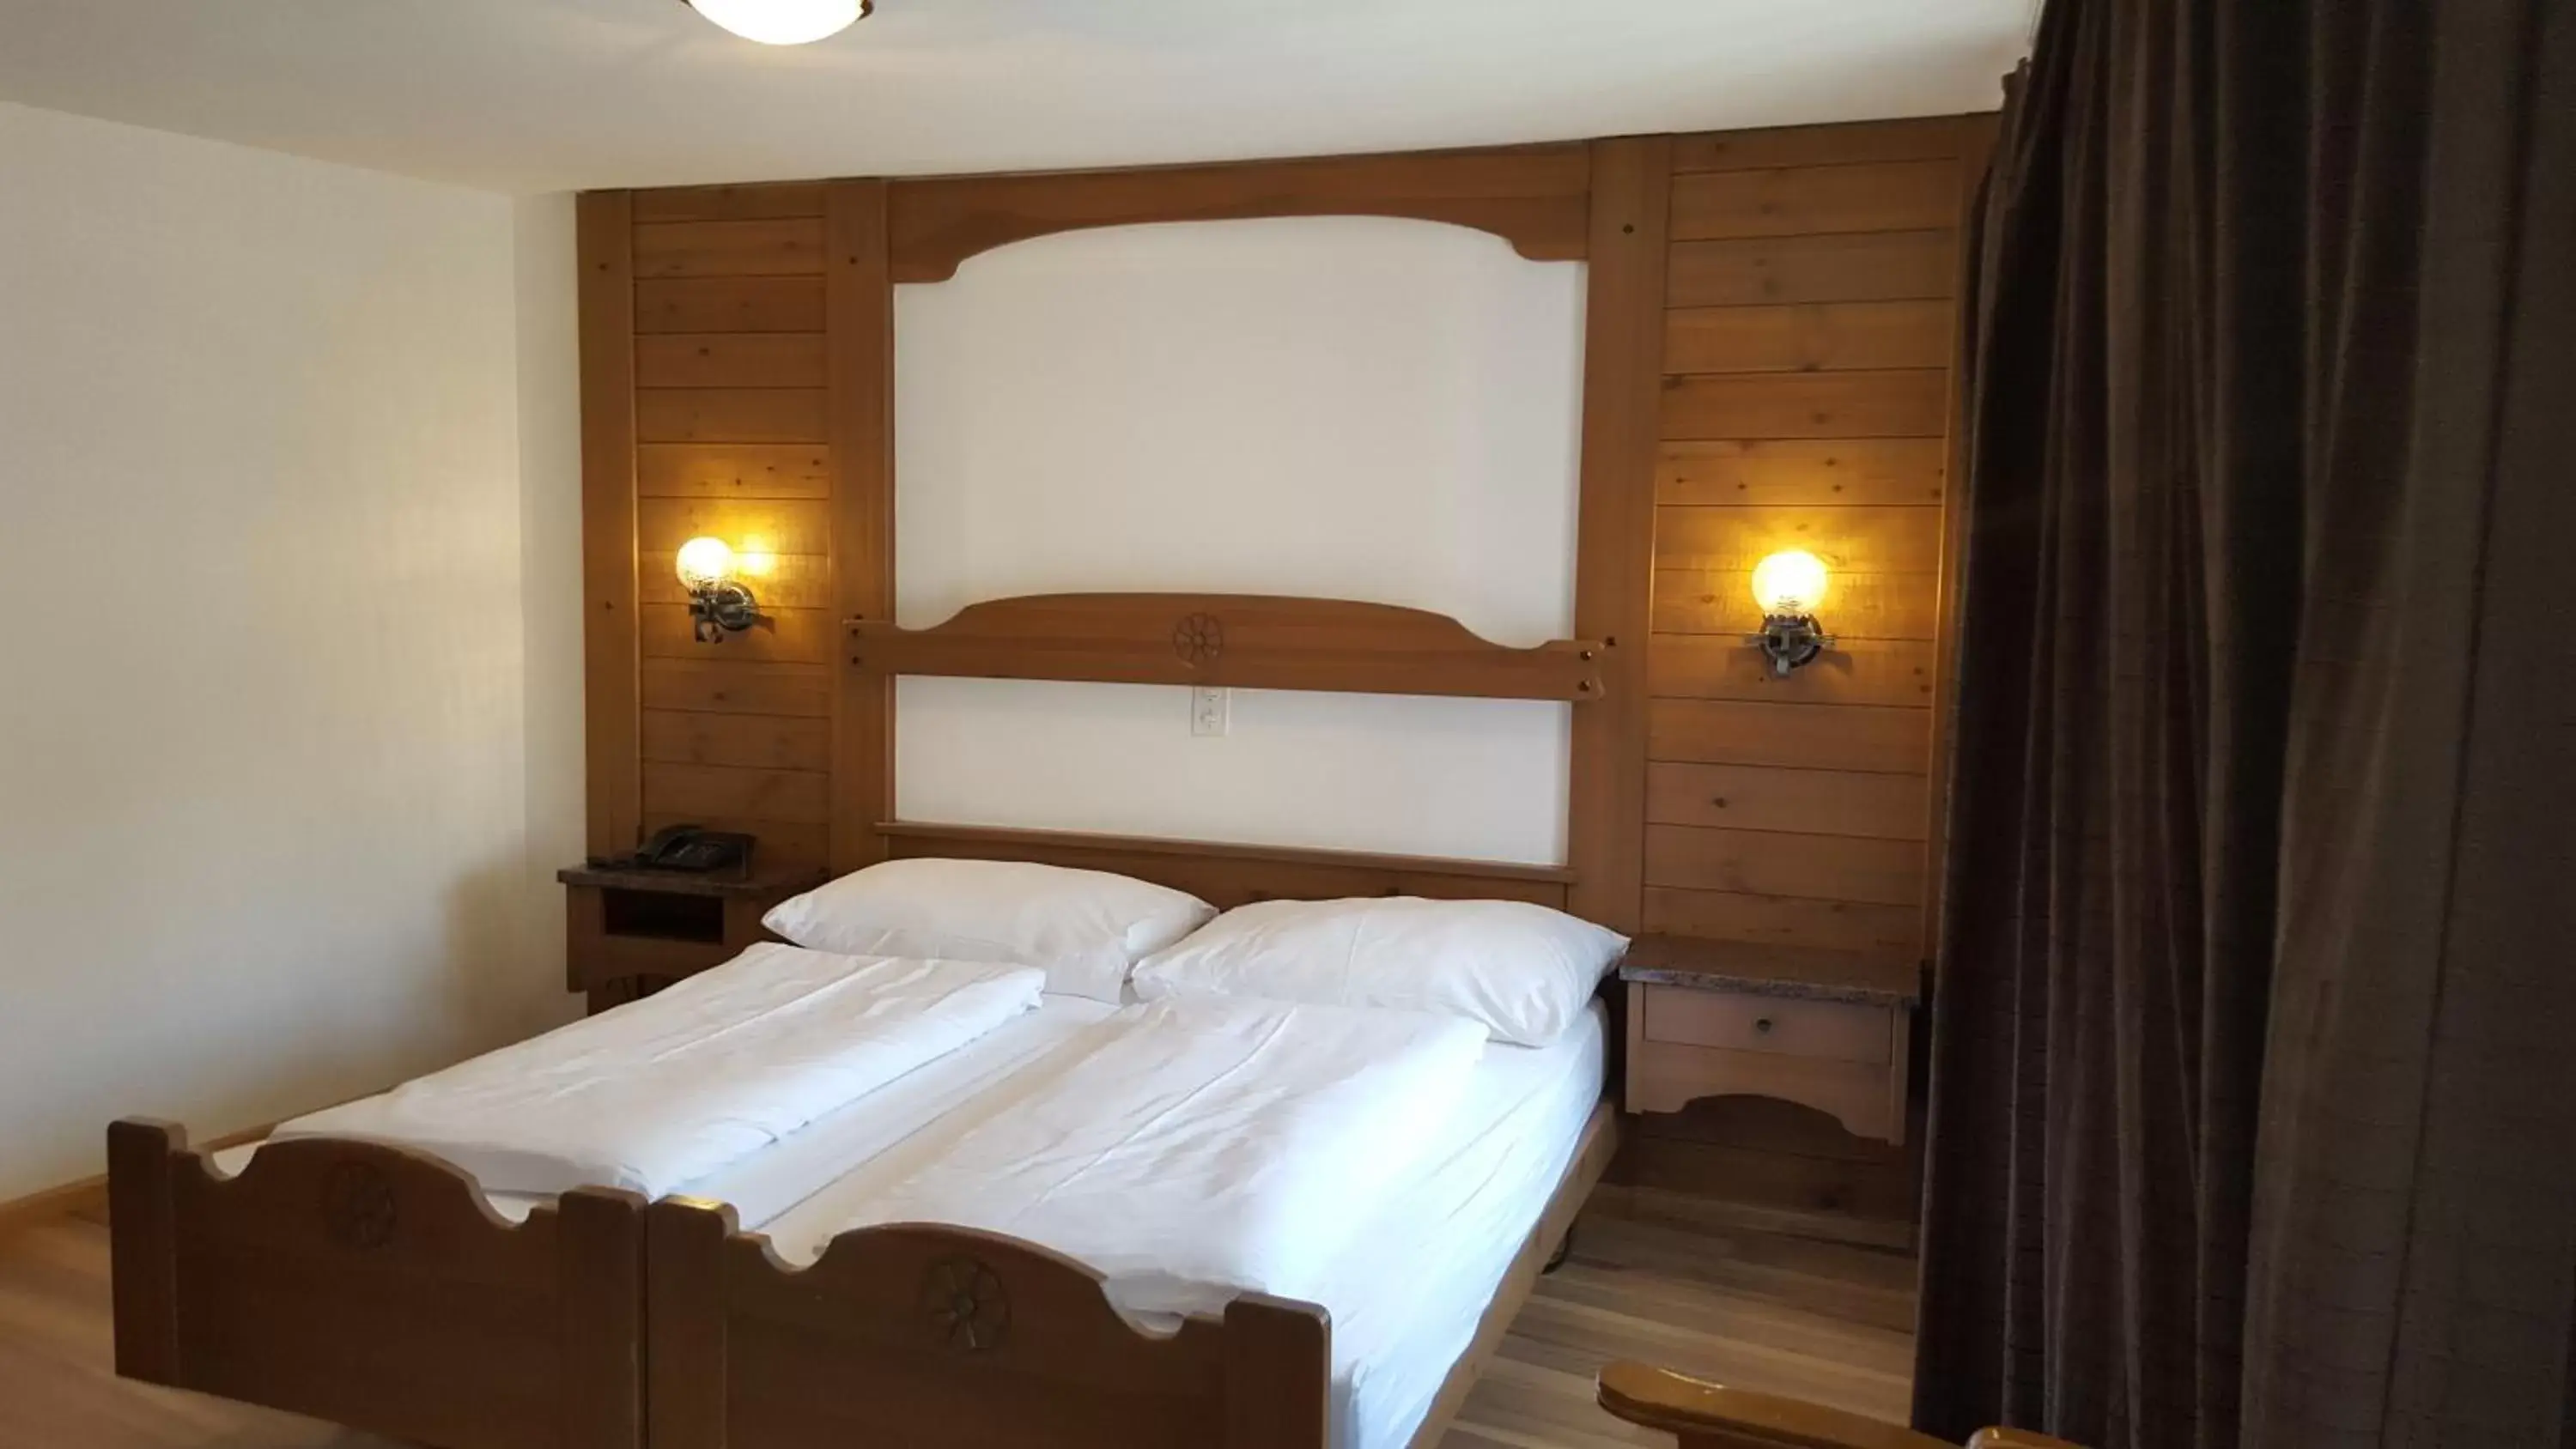 Bed, Room Photo in Spalenbrunnen Hotel & Restaurant Basel City Center